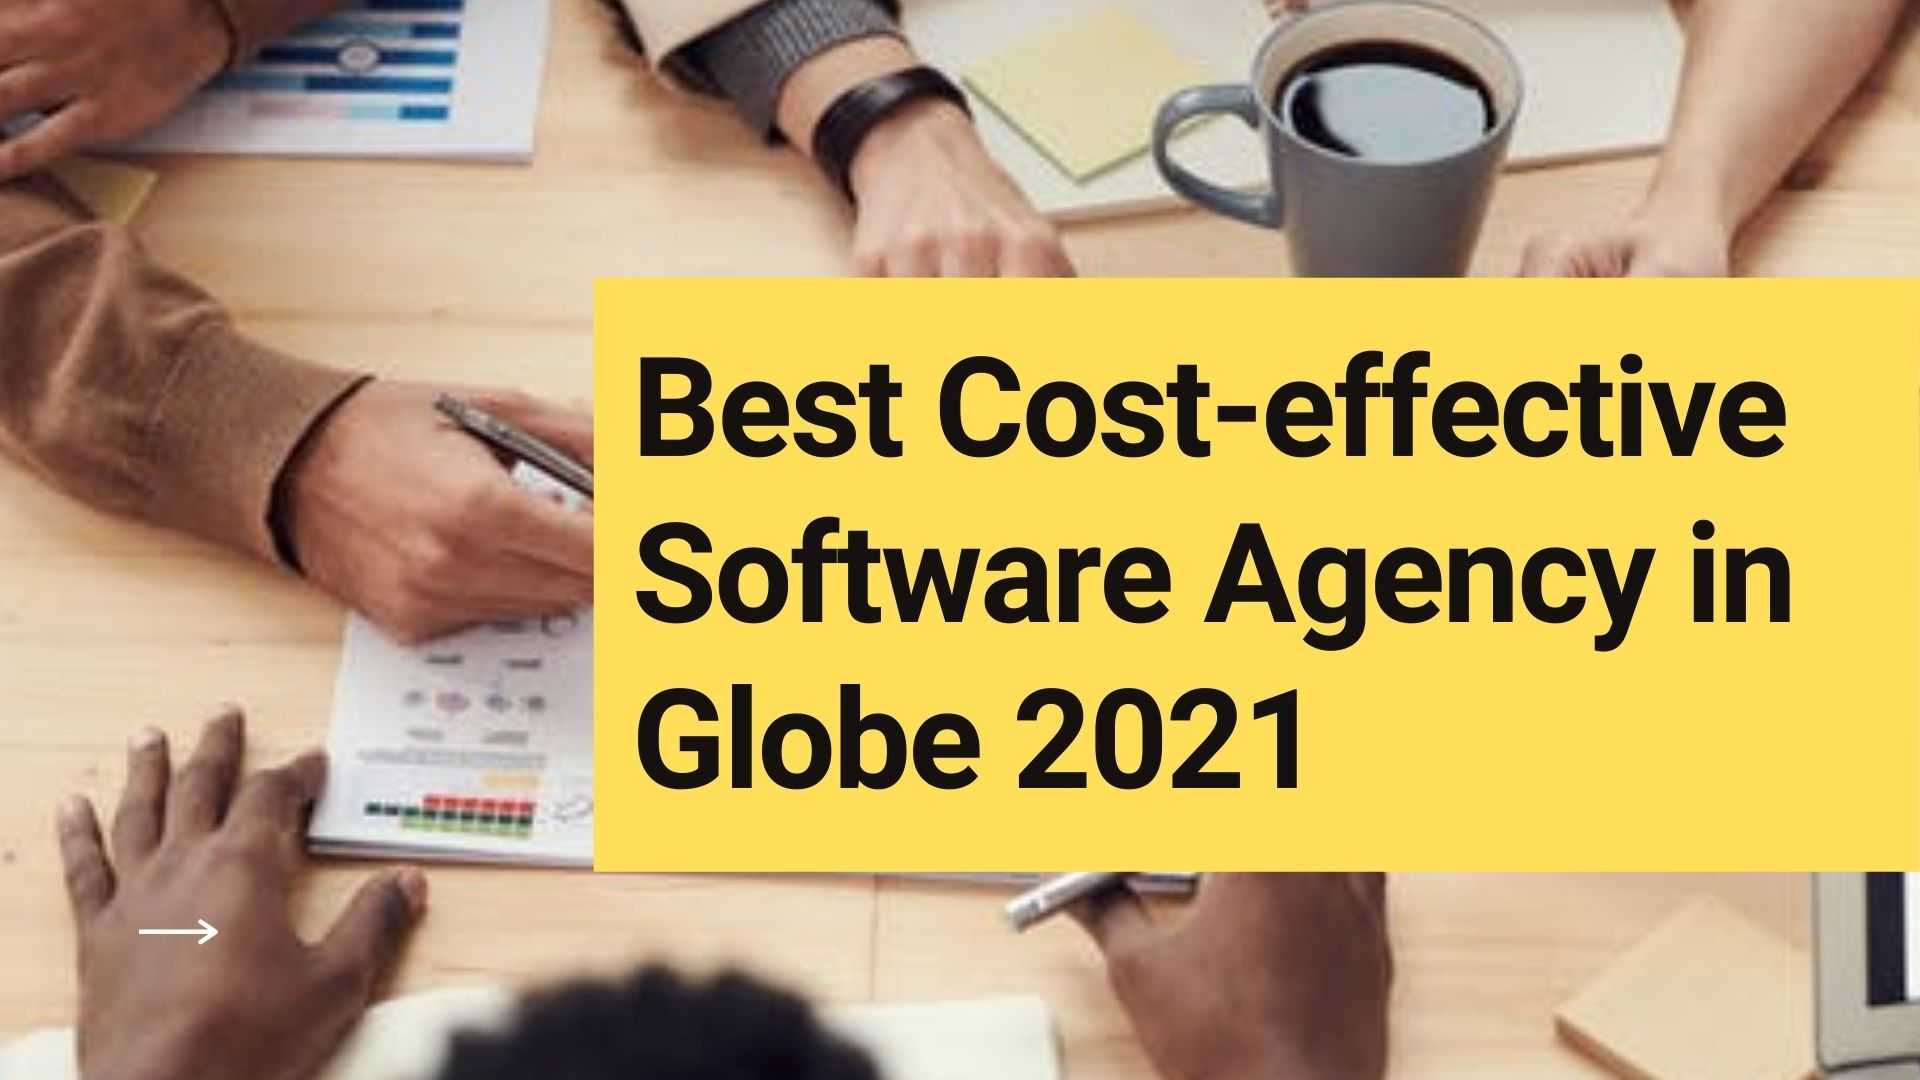 Best Cost-effective Software Agency in Globe 2021